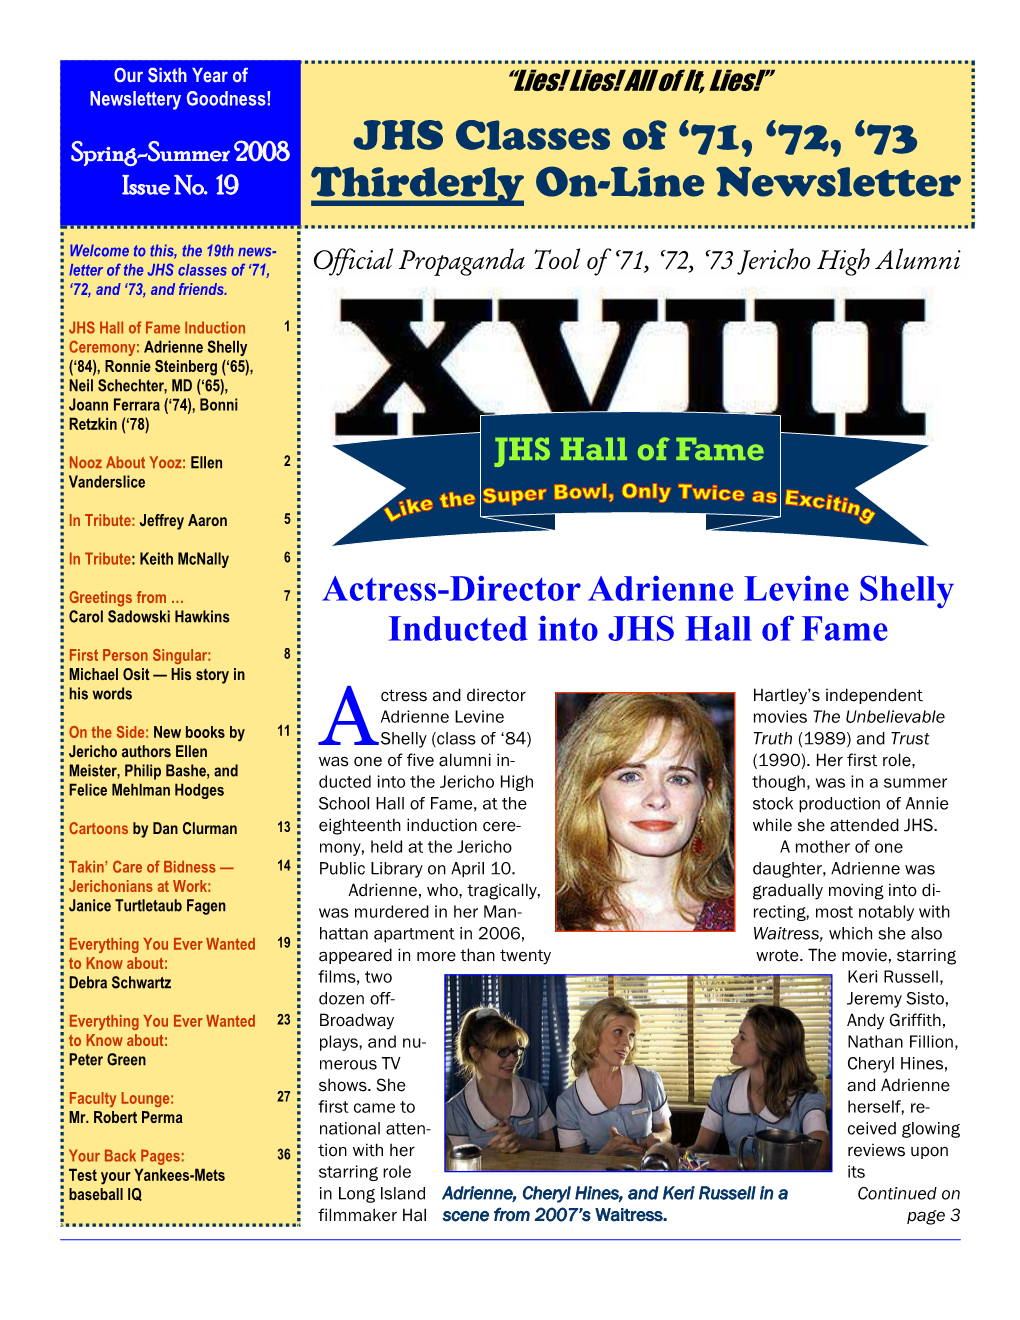 Issue No. 19, Spring-Summer 2008